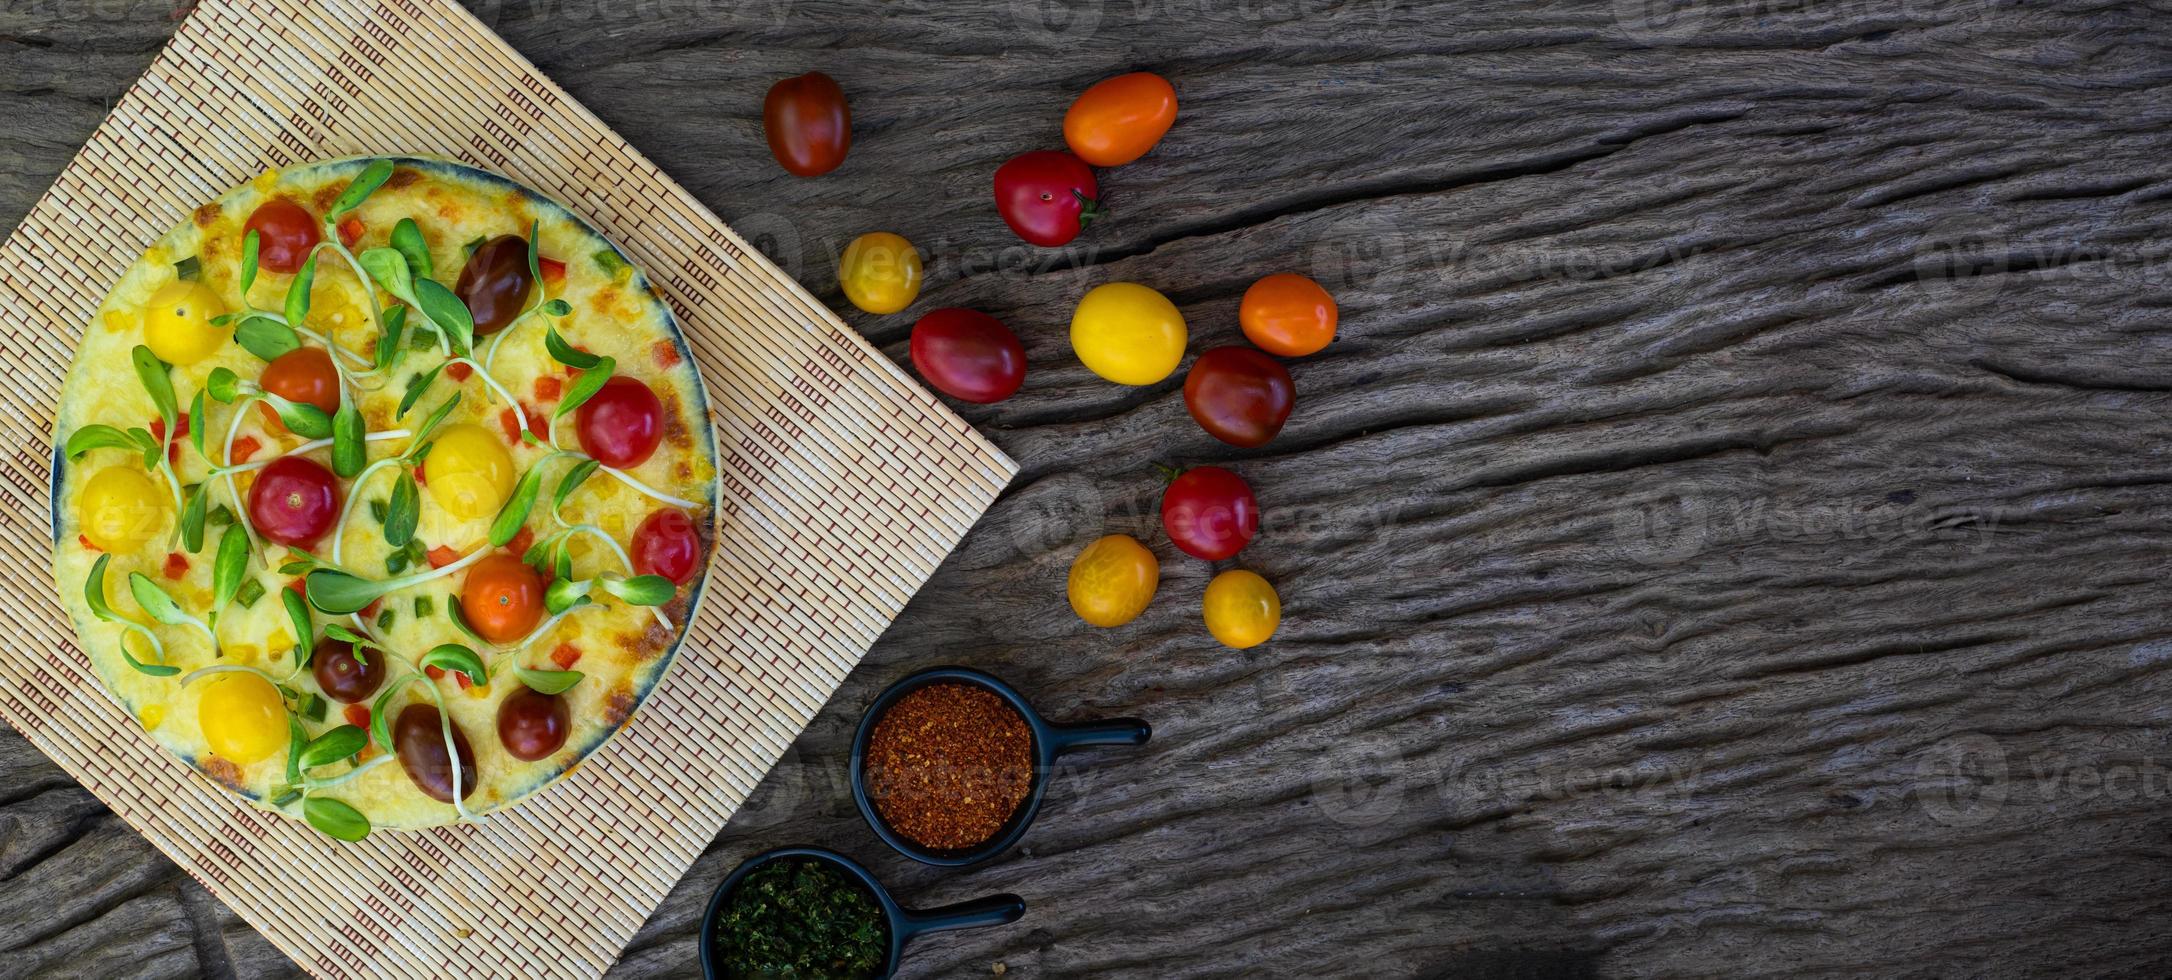 pizza vegetariana caseira com tomate cereja foto